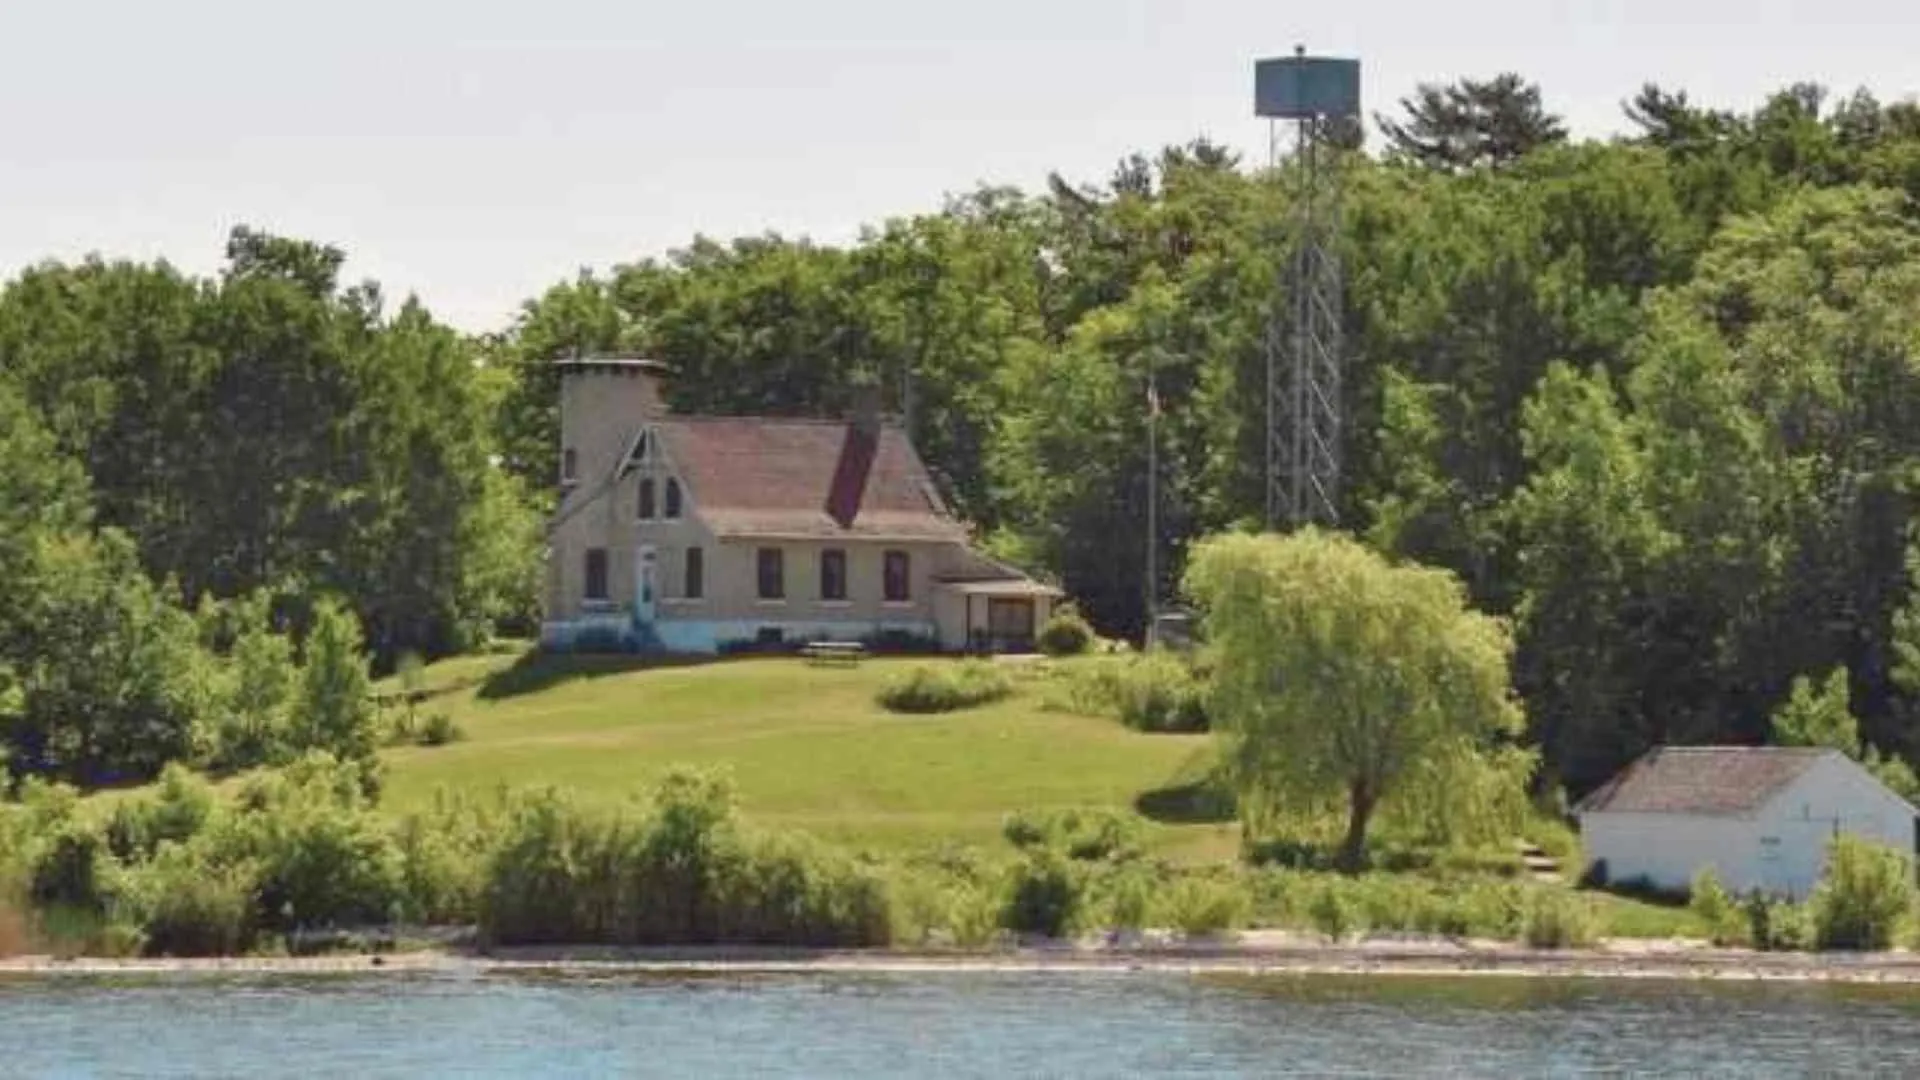 Chambers Island Lighthouse